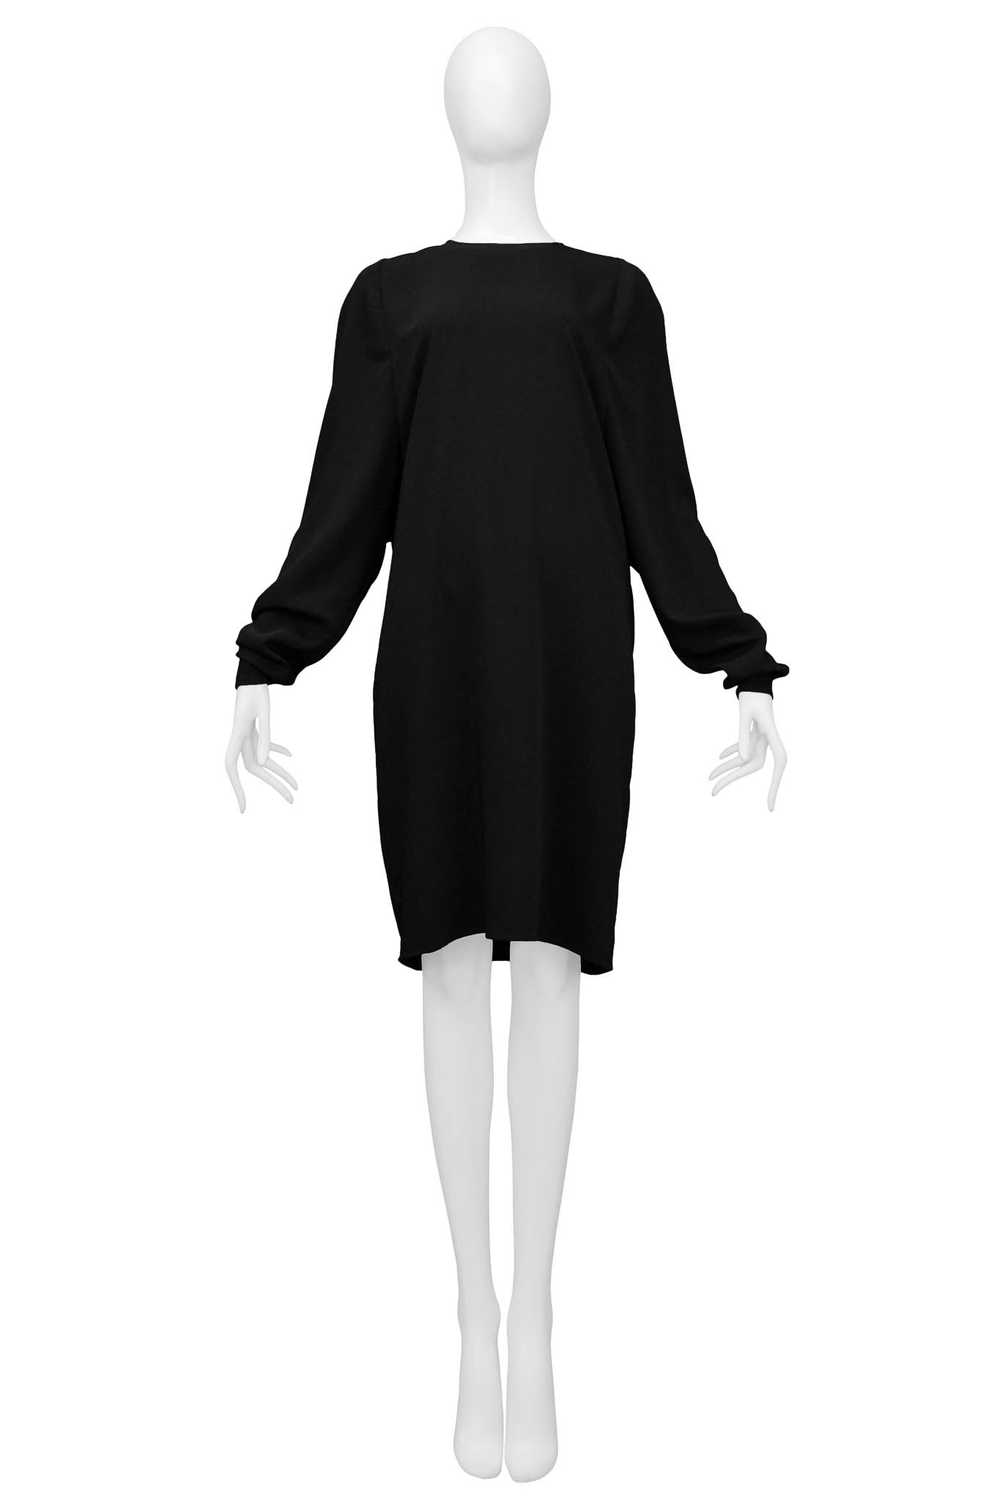 MARGIELA BLACK DRESS WITH LONG DOLMAN SLEEVES - image 3